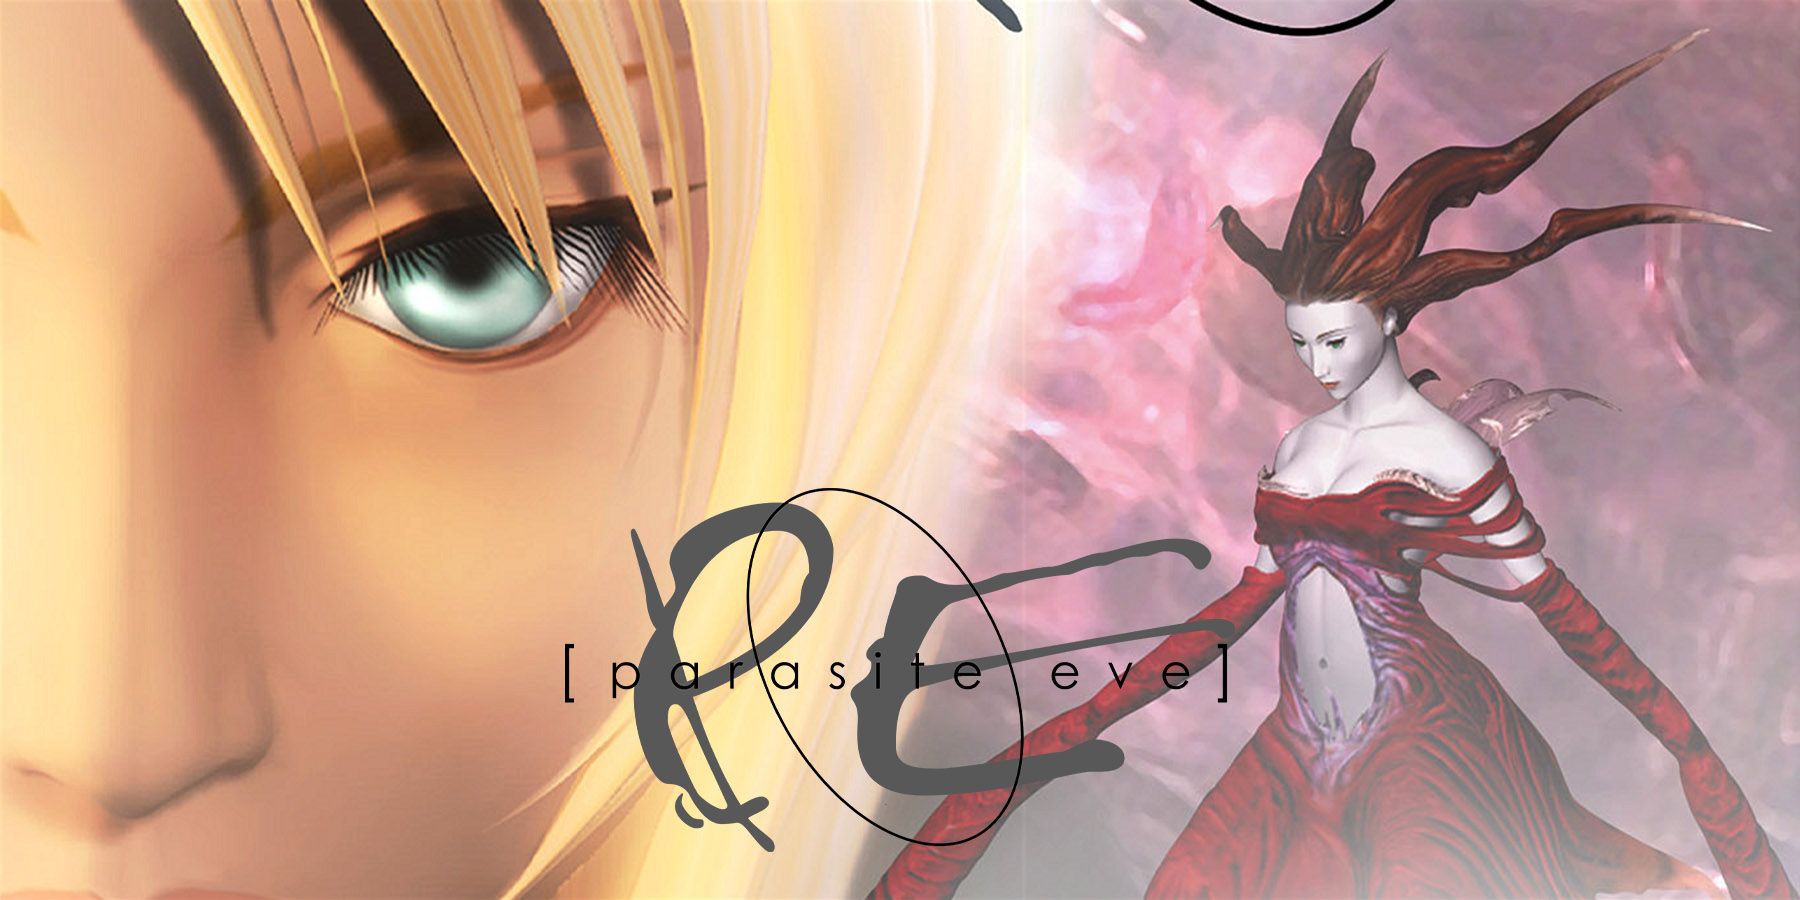 Final Fantasy 7 Remake Producer Gives Hope for New Parasite Eve Game